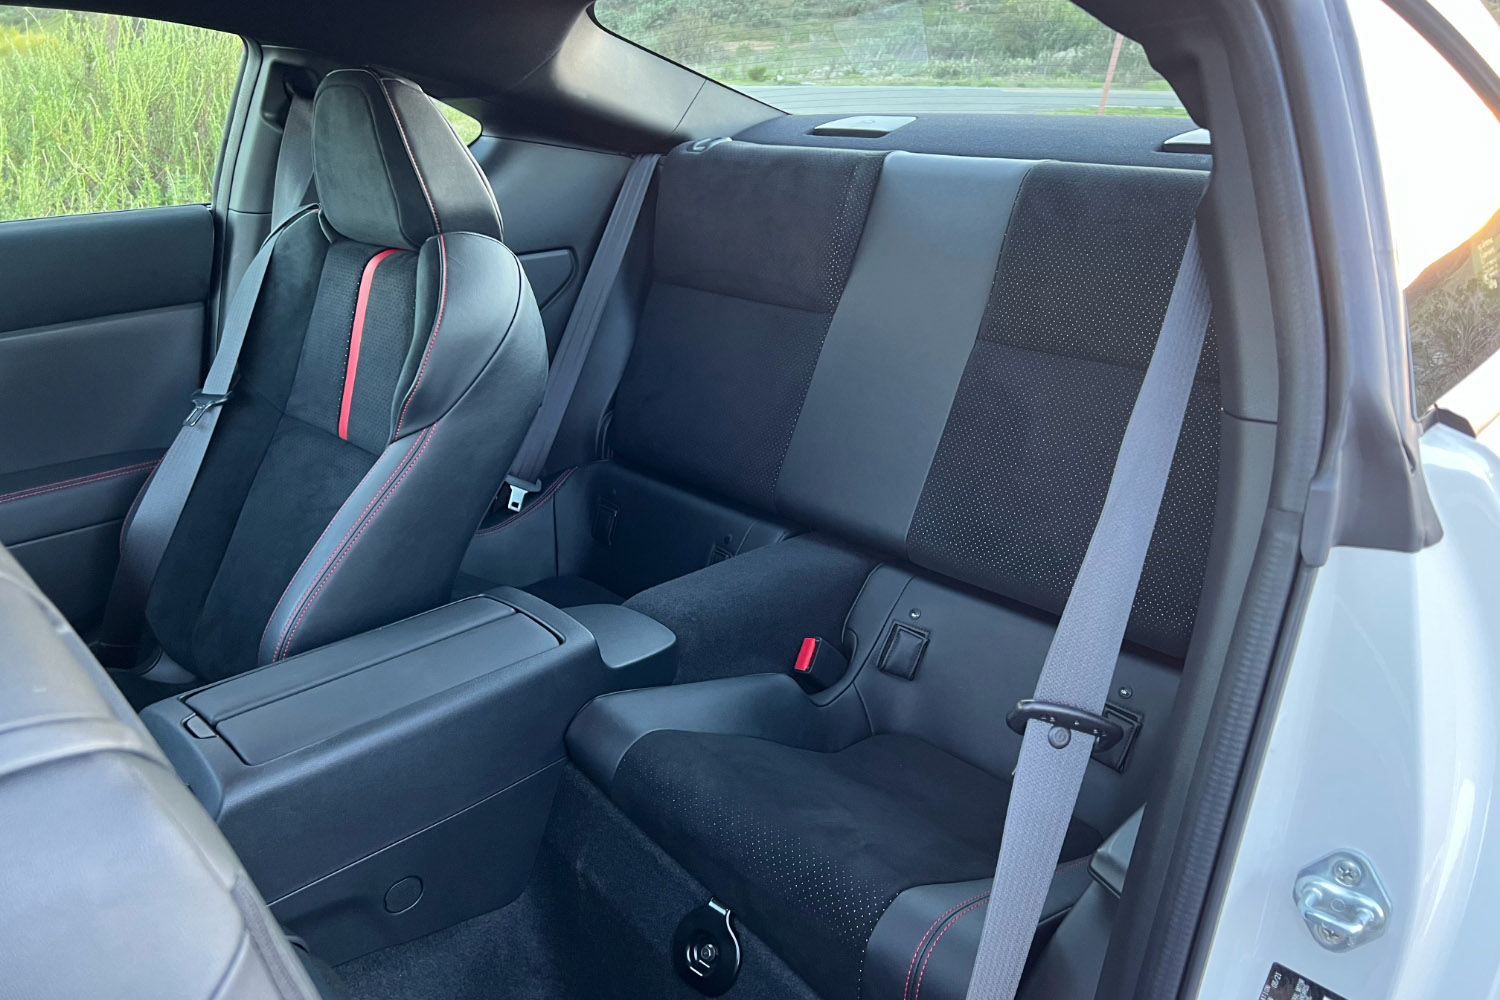 2022 Subaru BRZ back seat